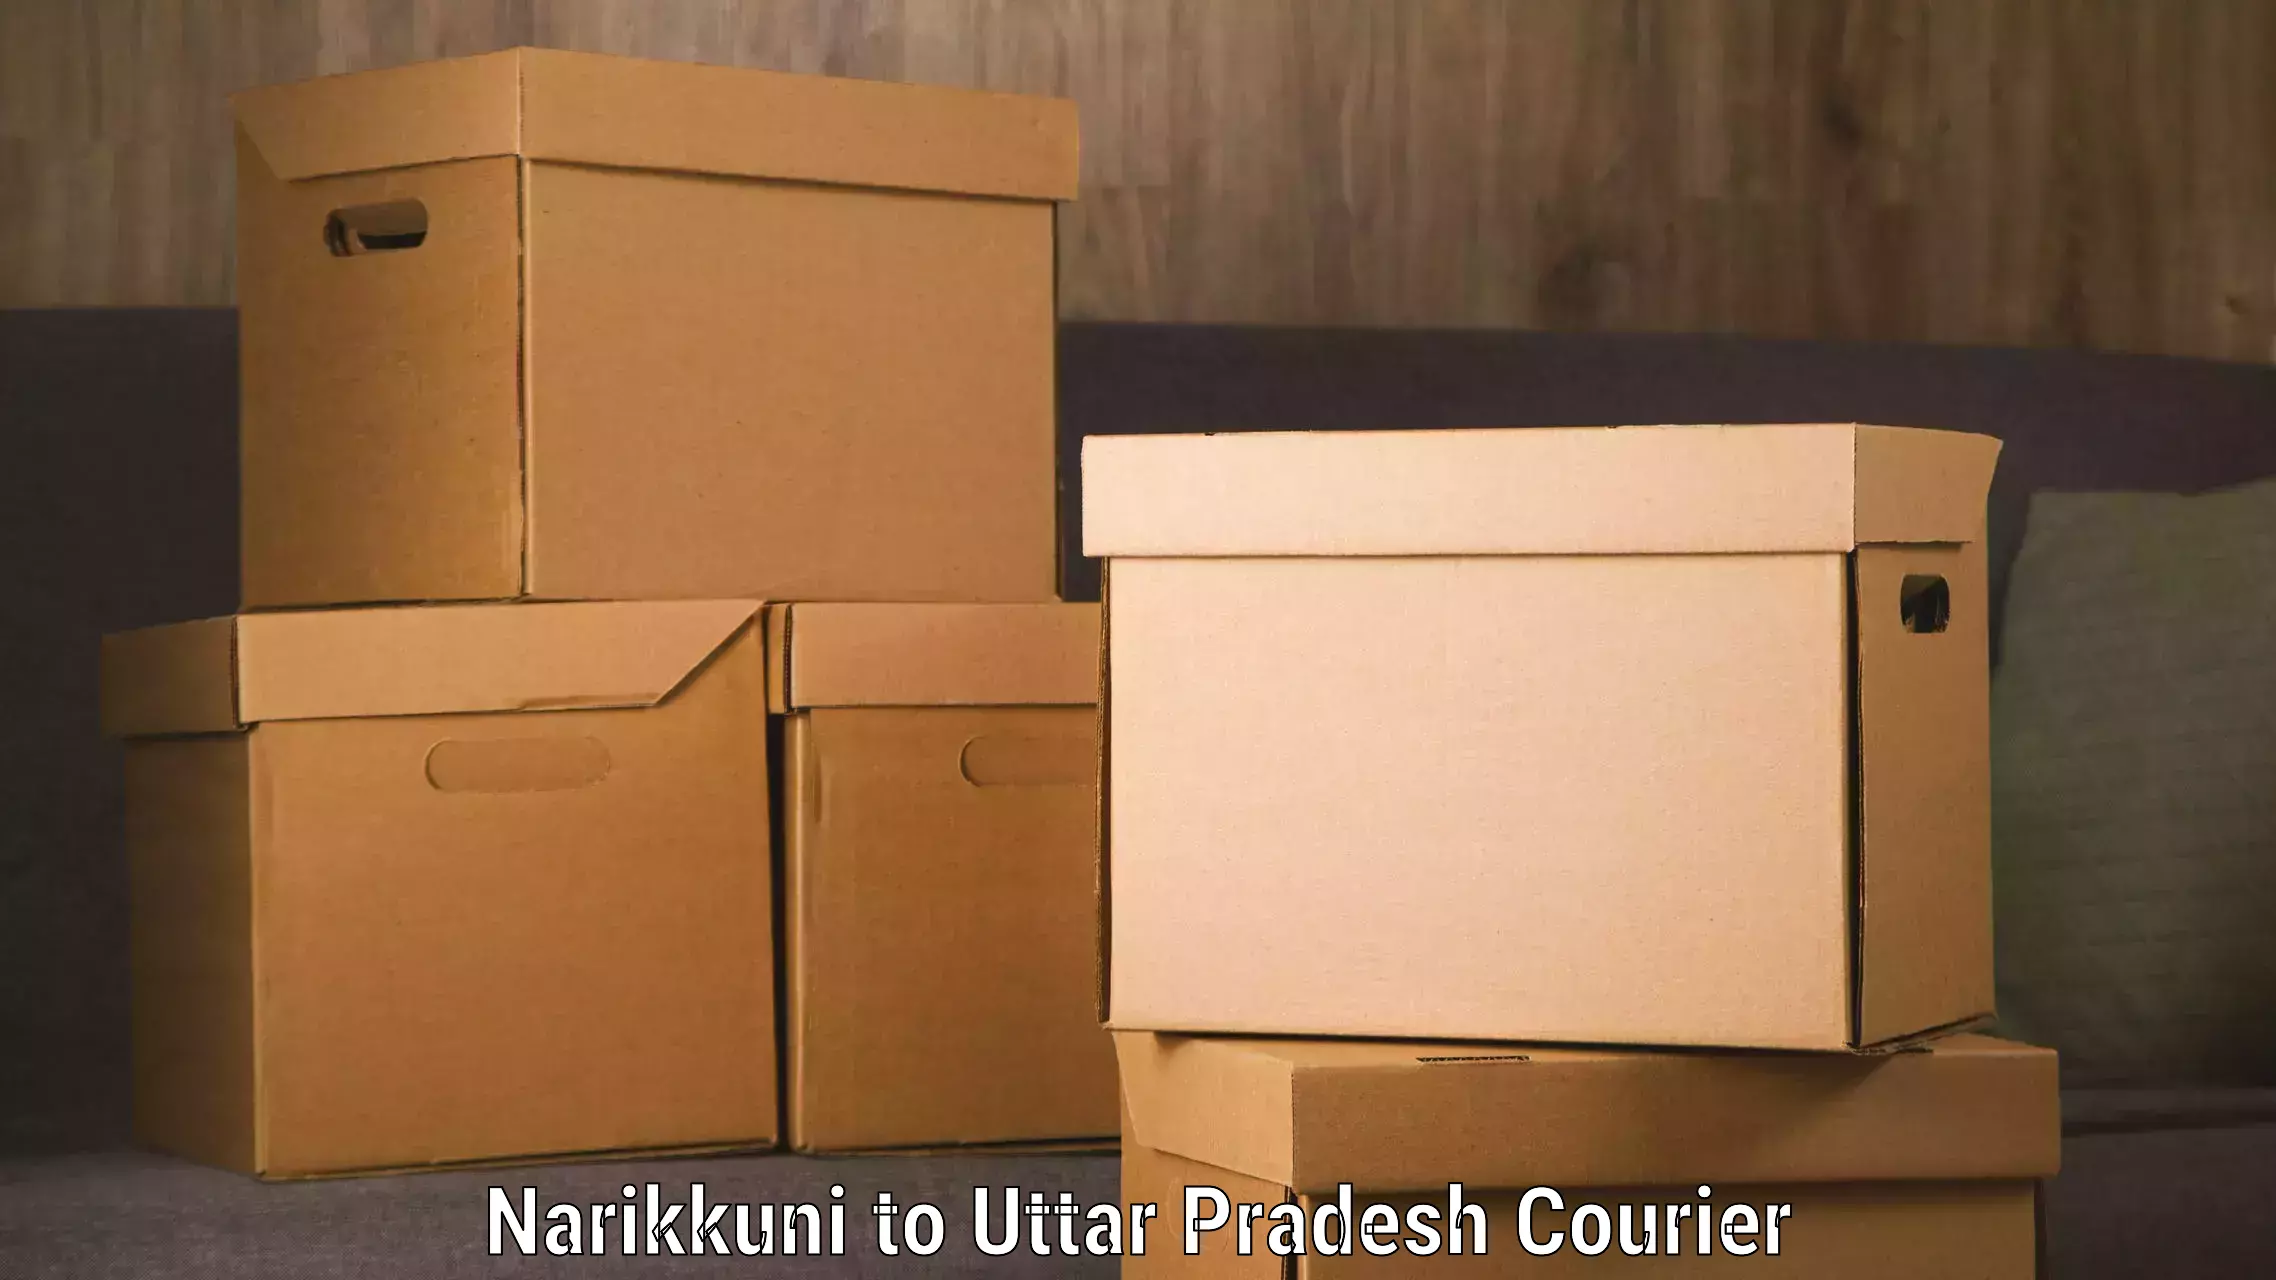 Courier service comparison Narikkuni to Kanpur